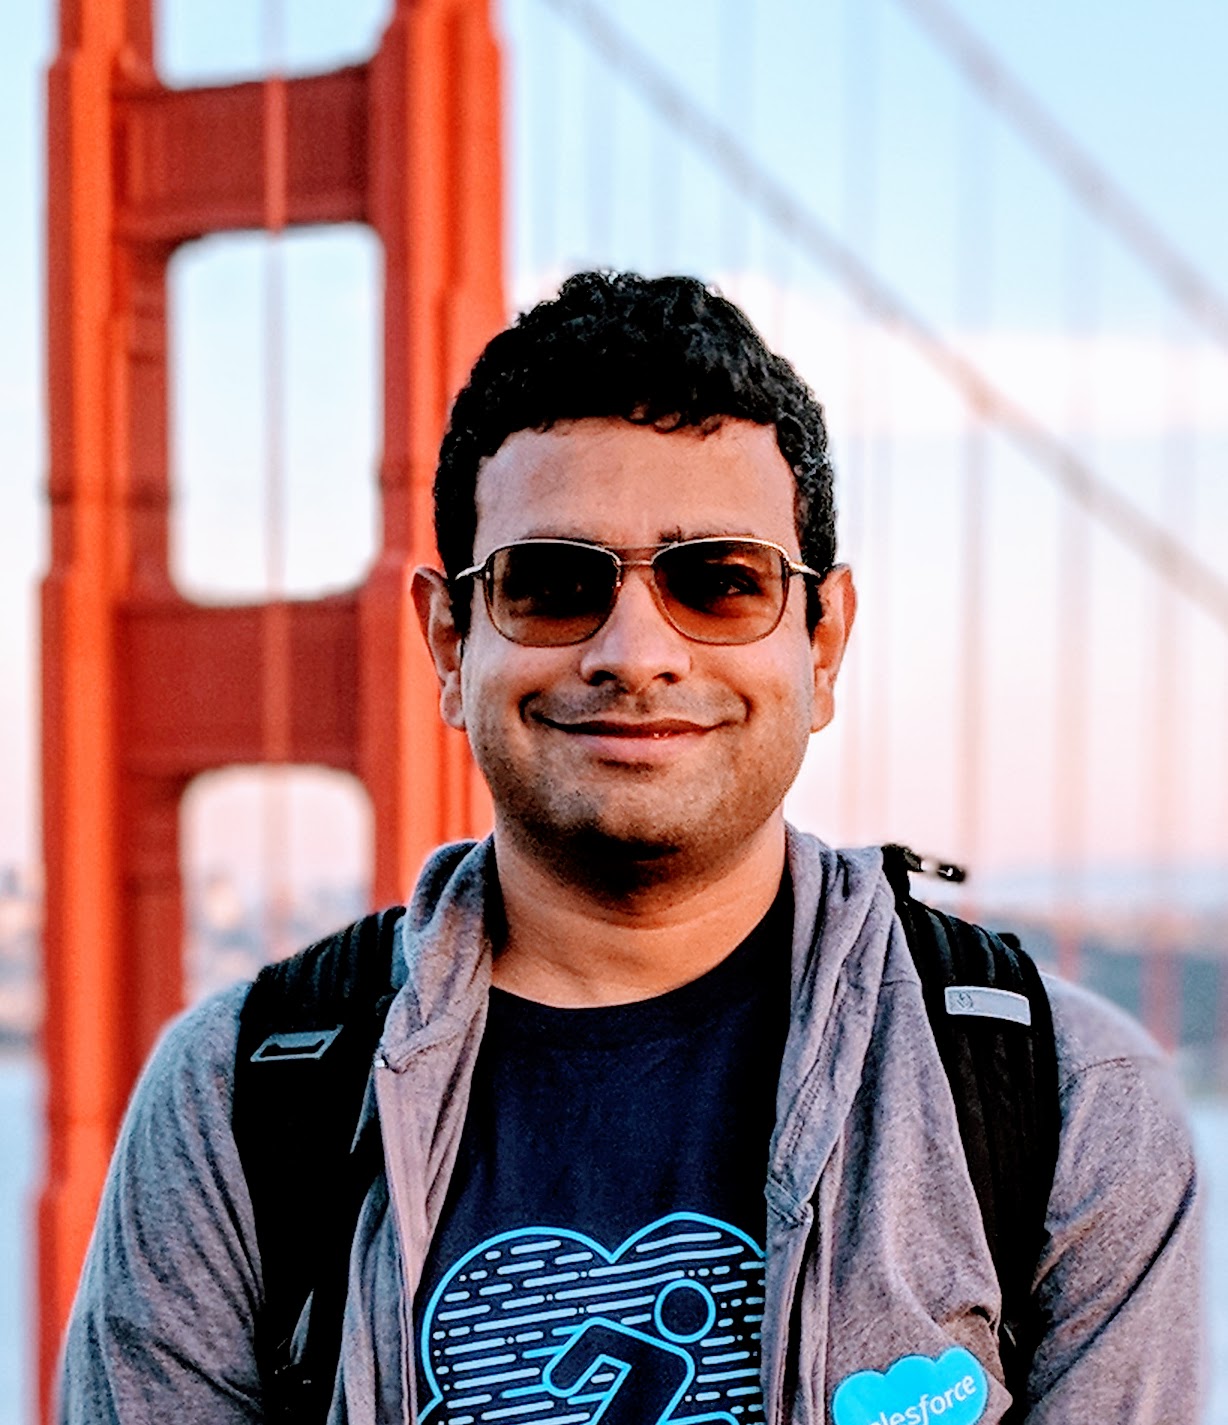 Me(Shrey) at the Golden Gate Bridge in San Francisco.